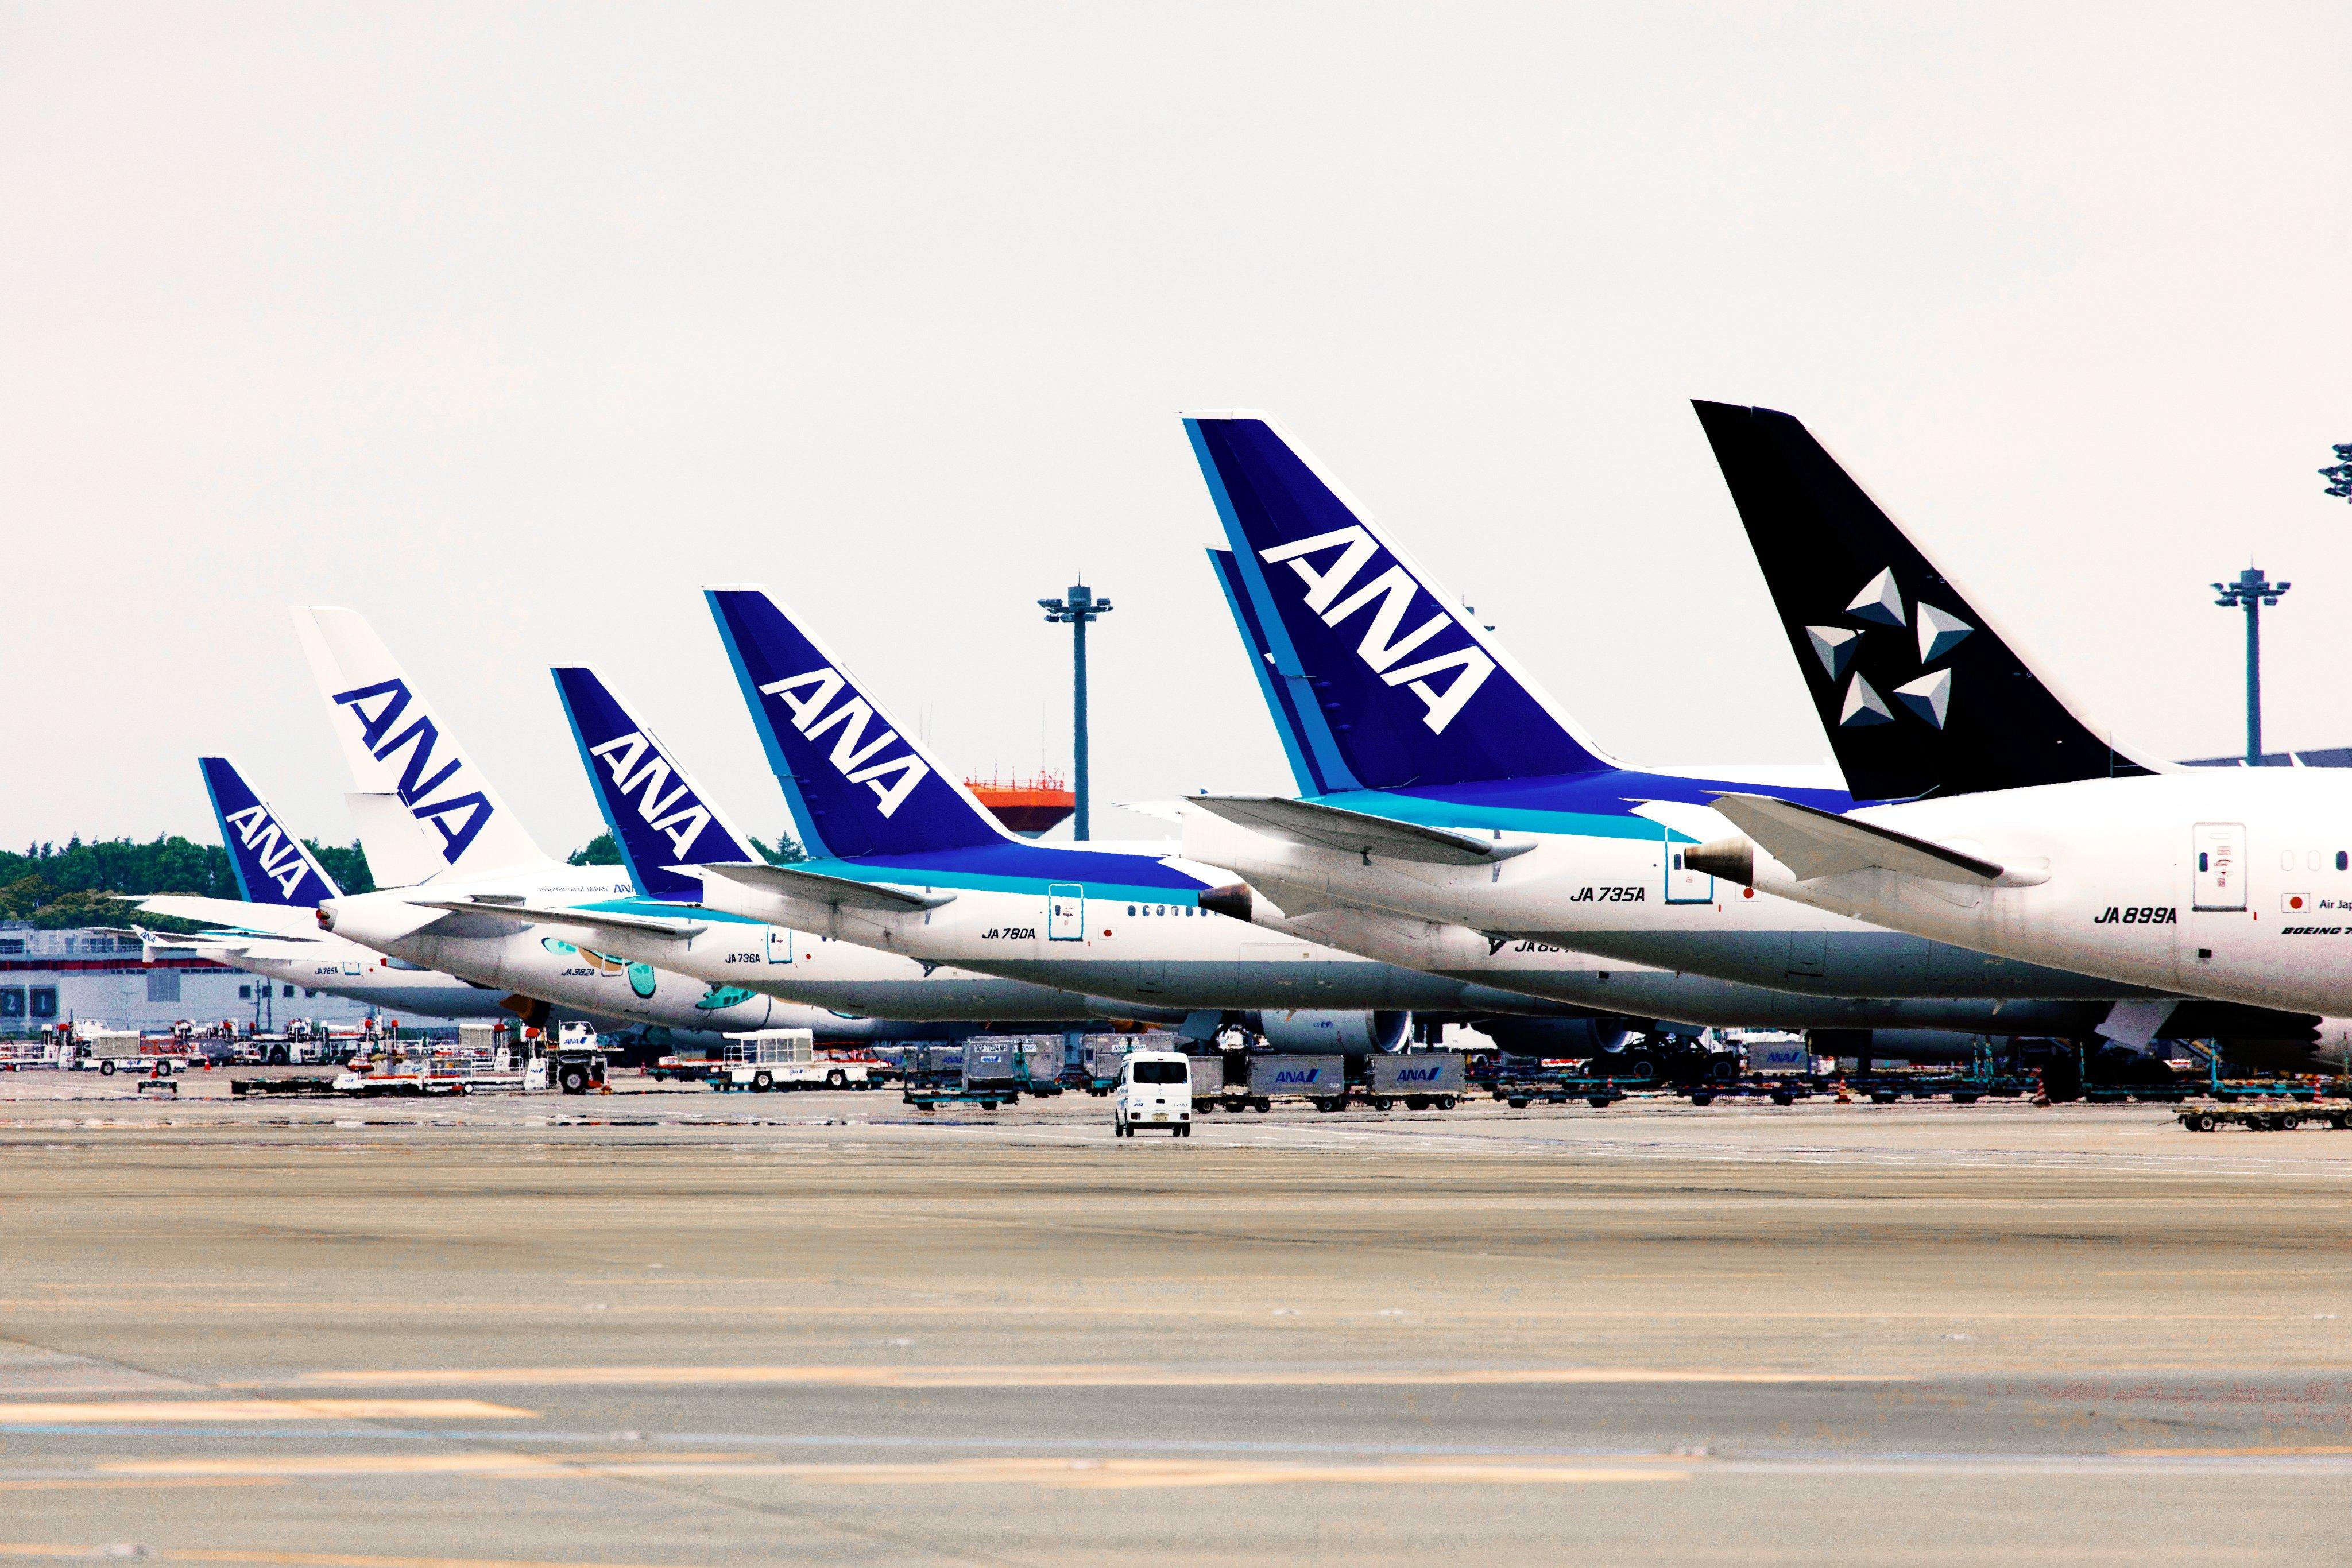 All Nippon Airways planes